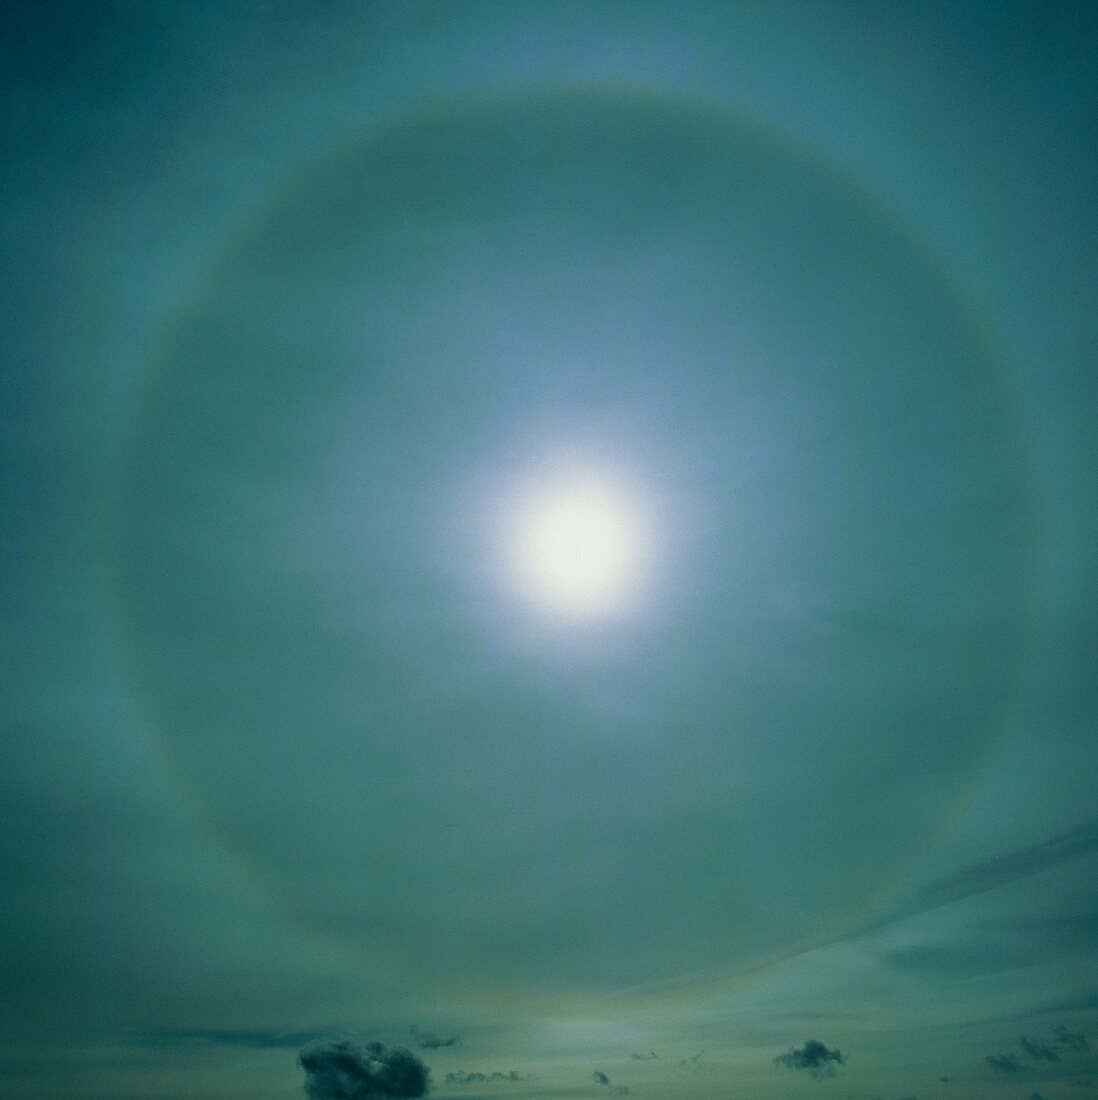 A 22 degree ice halo around the Sun